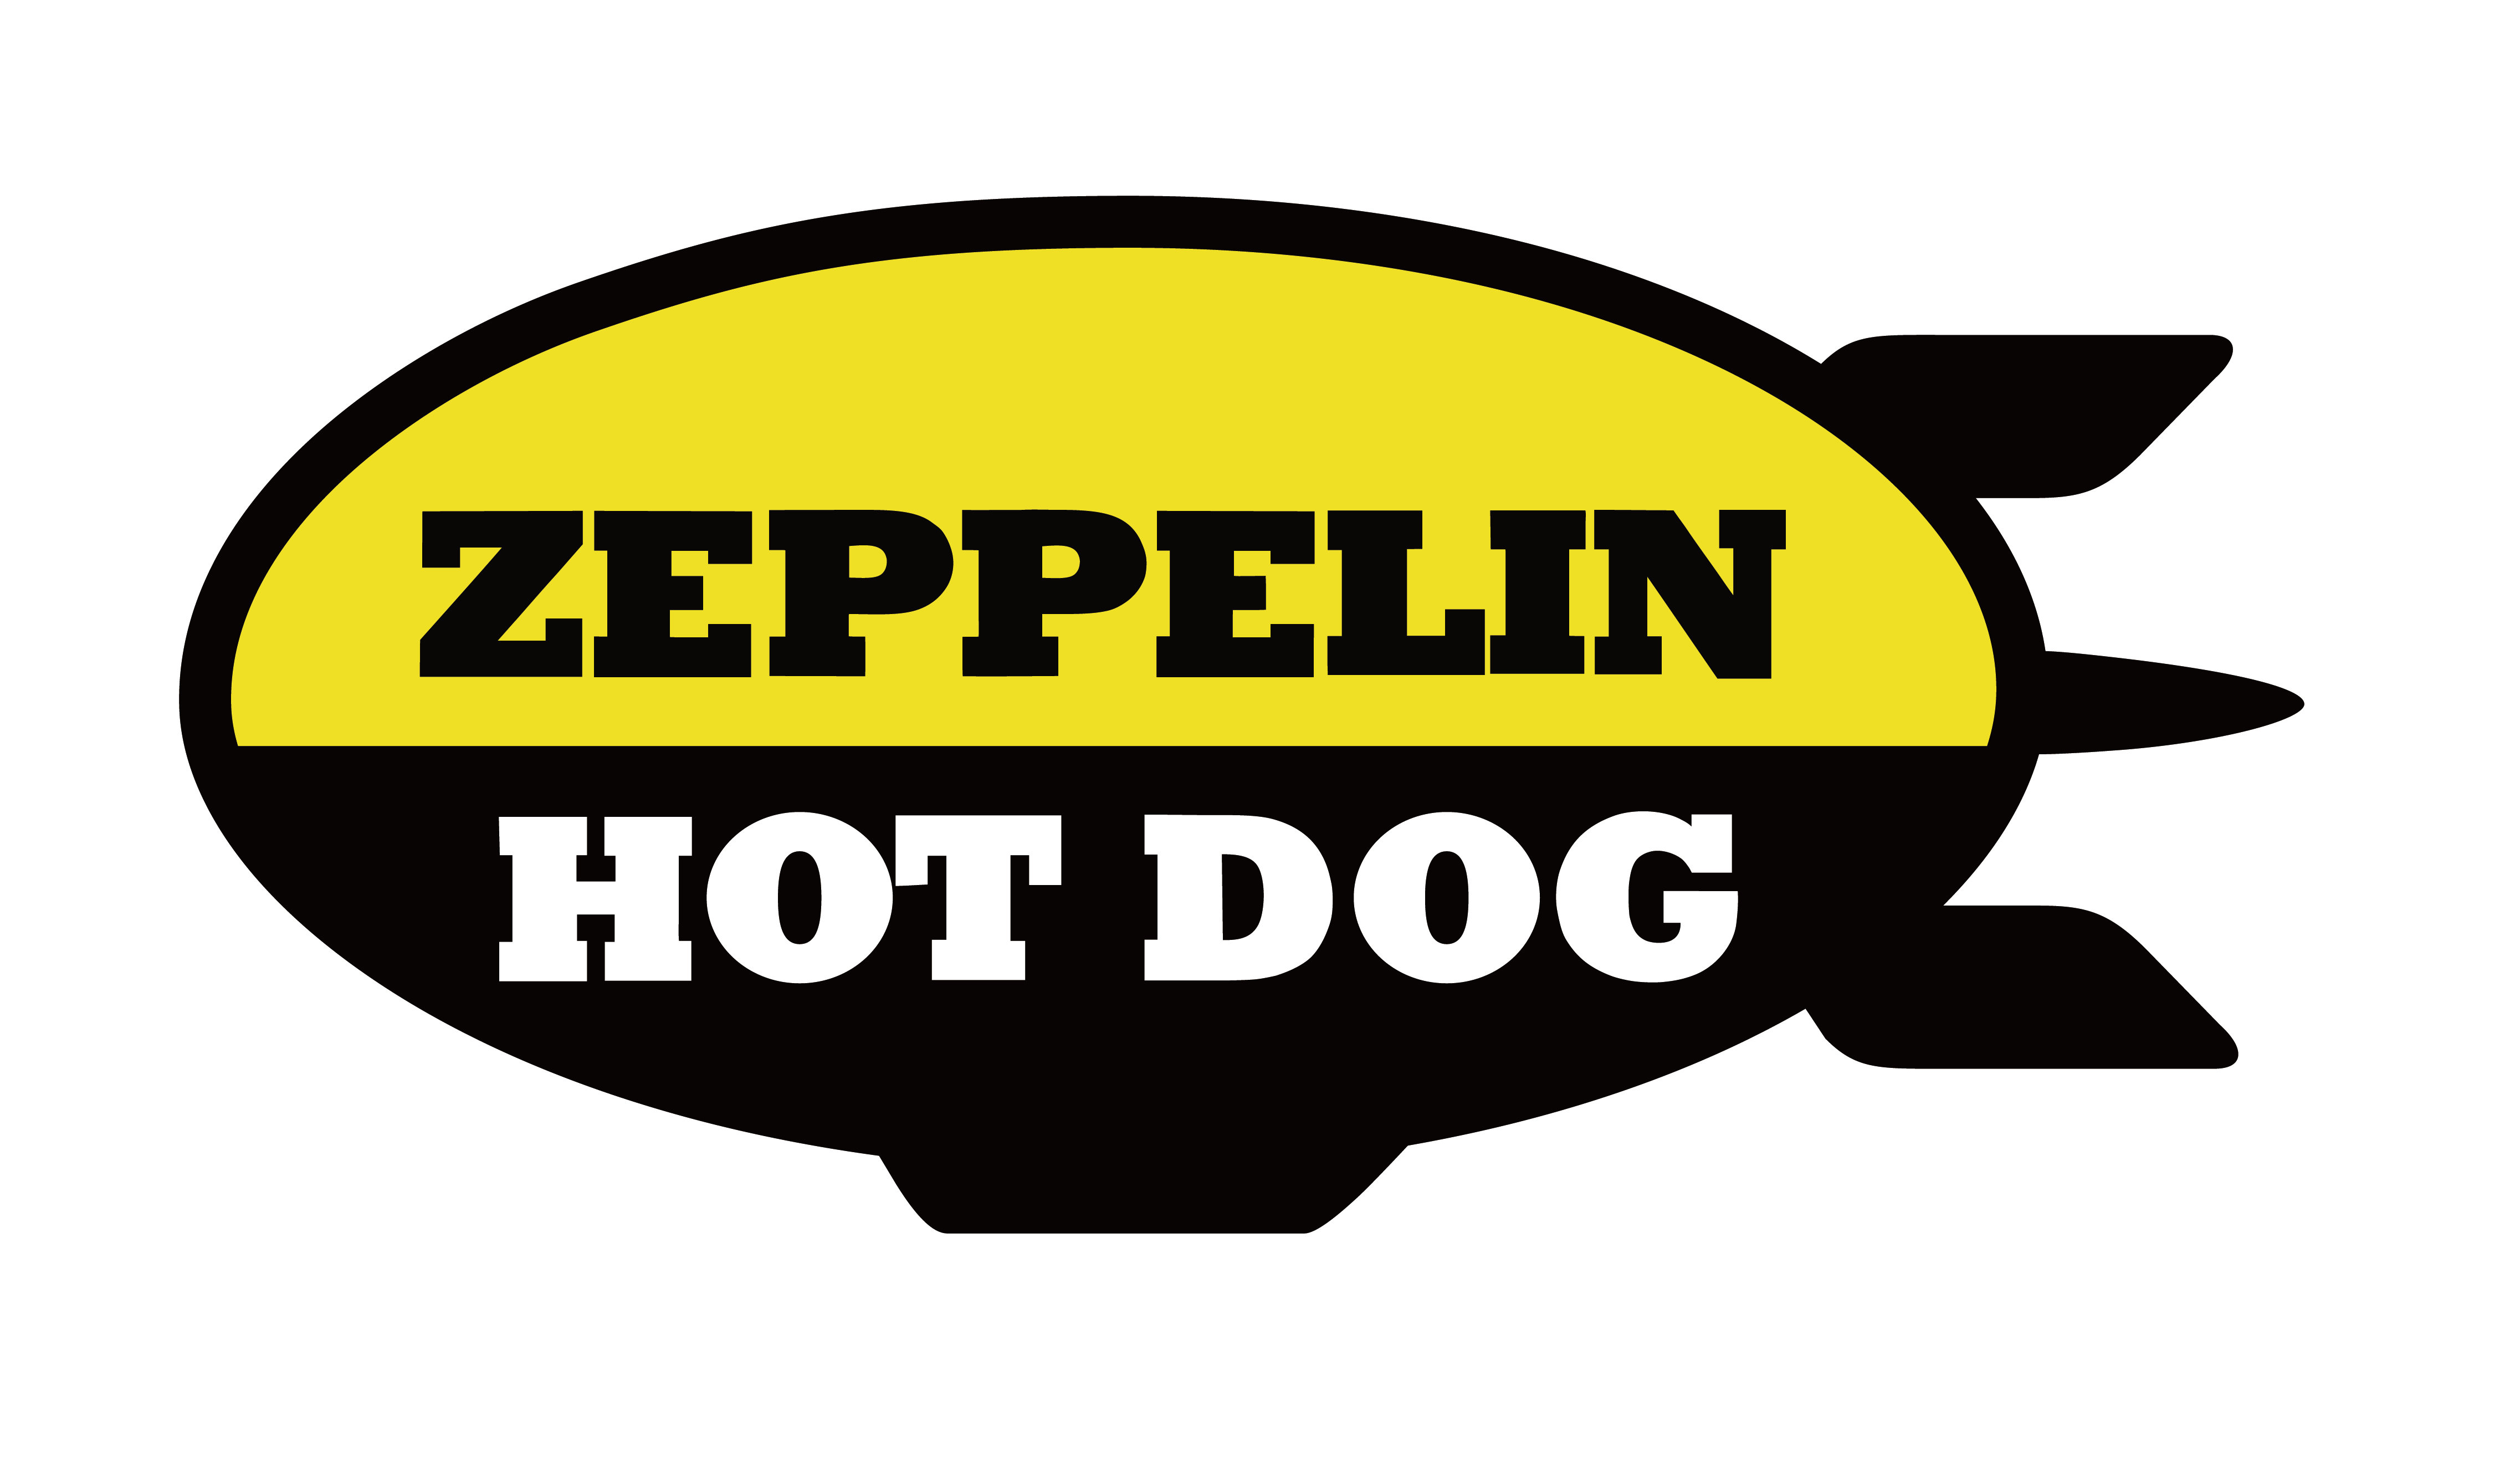 ZEPPELIN HOT DOG